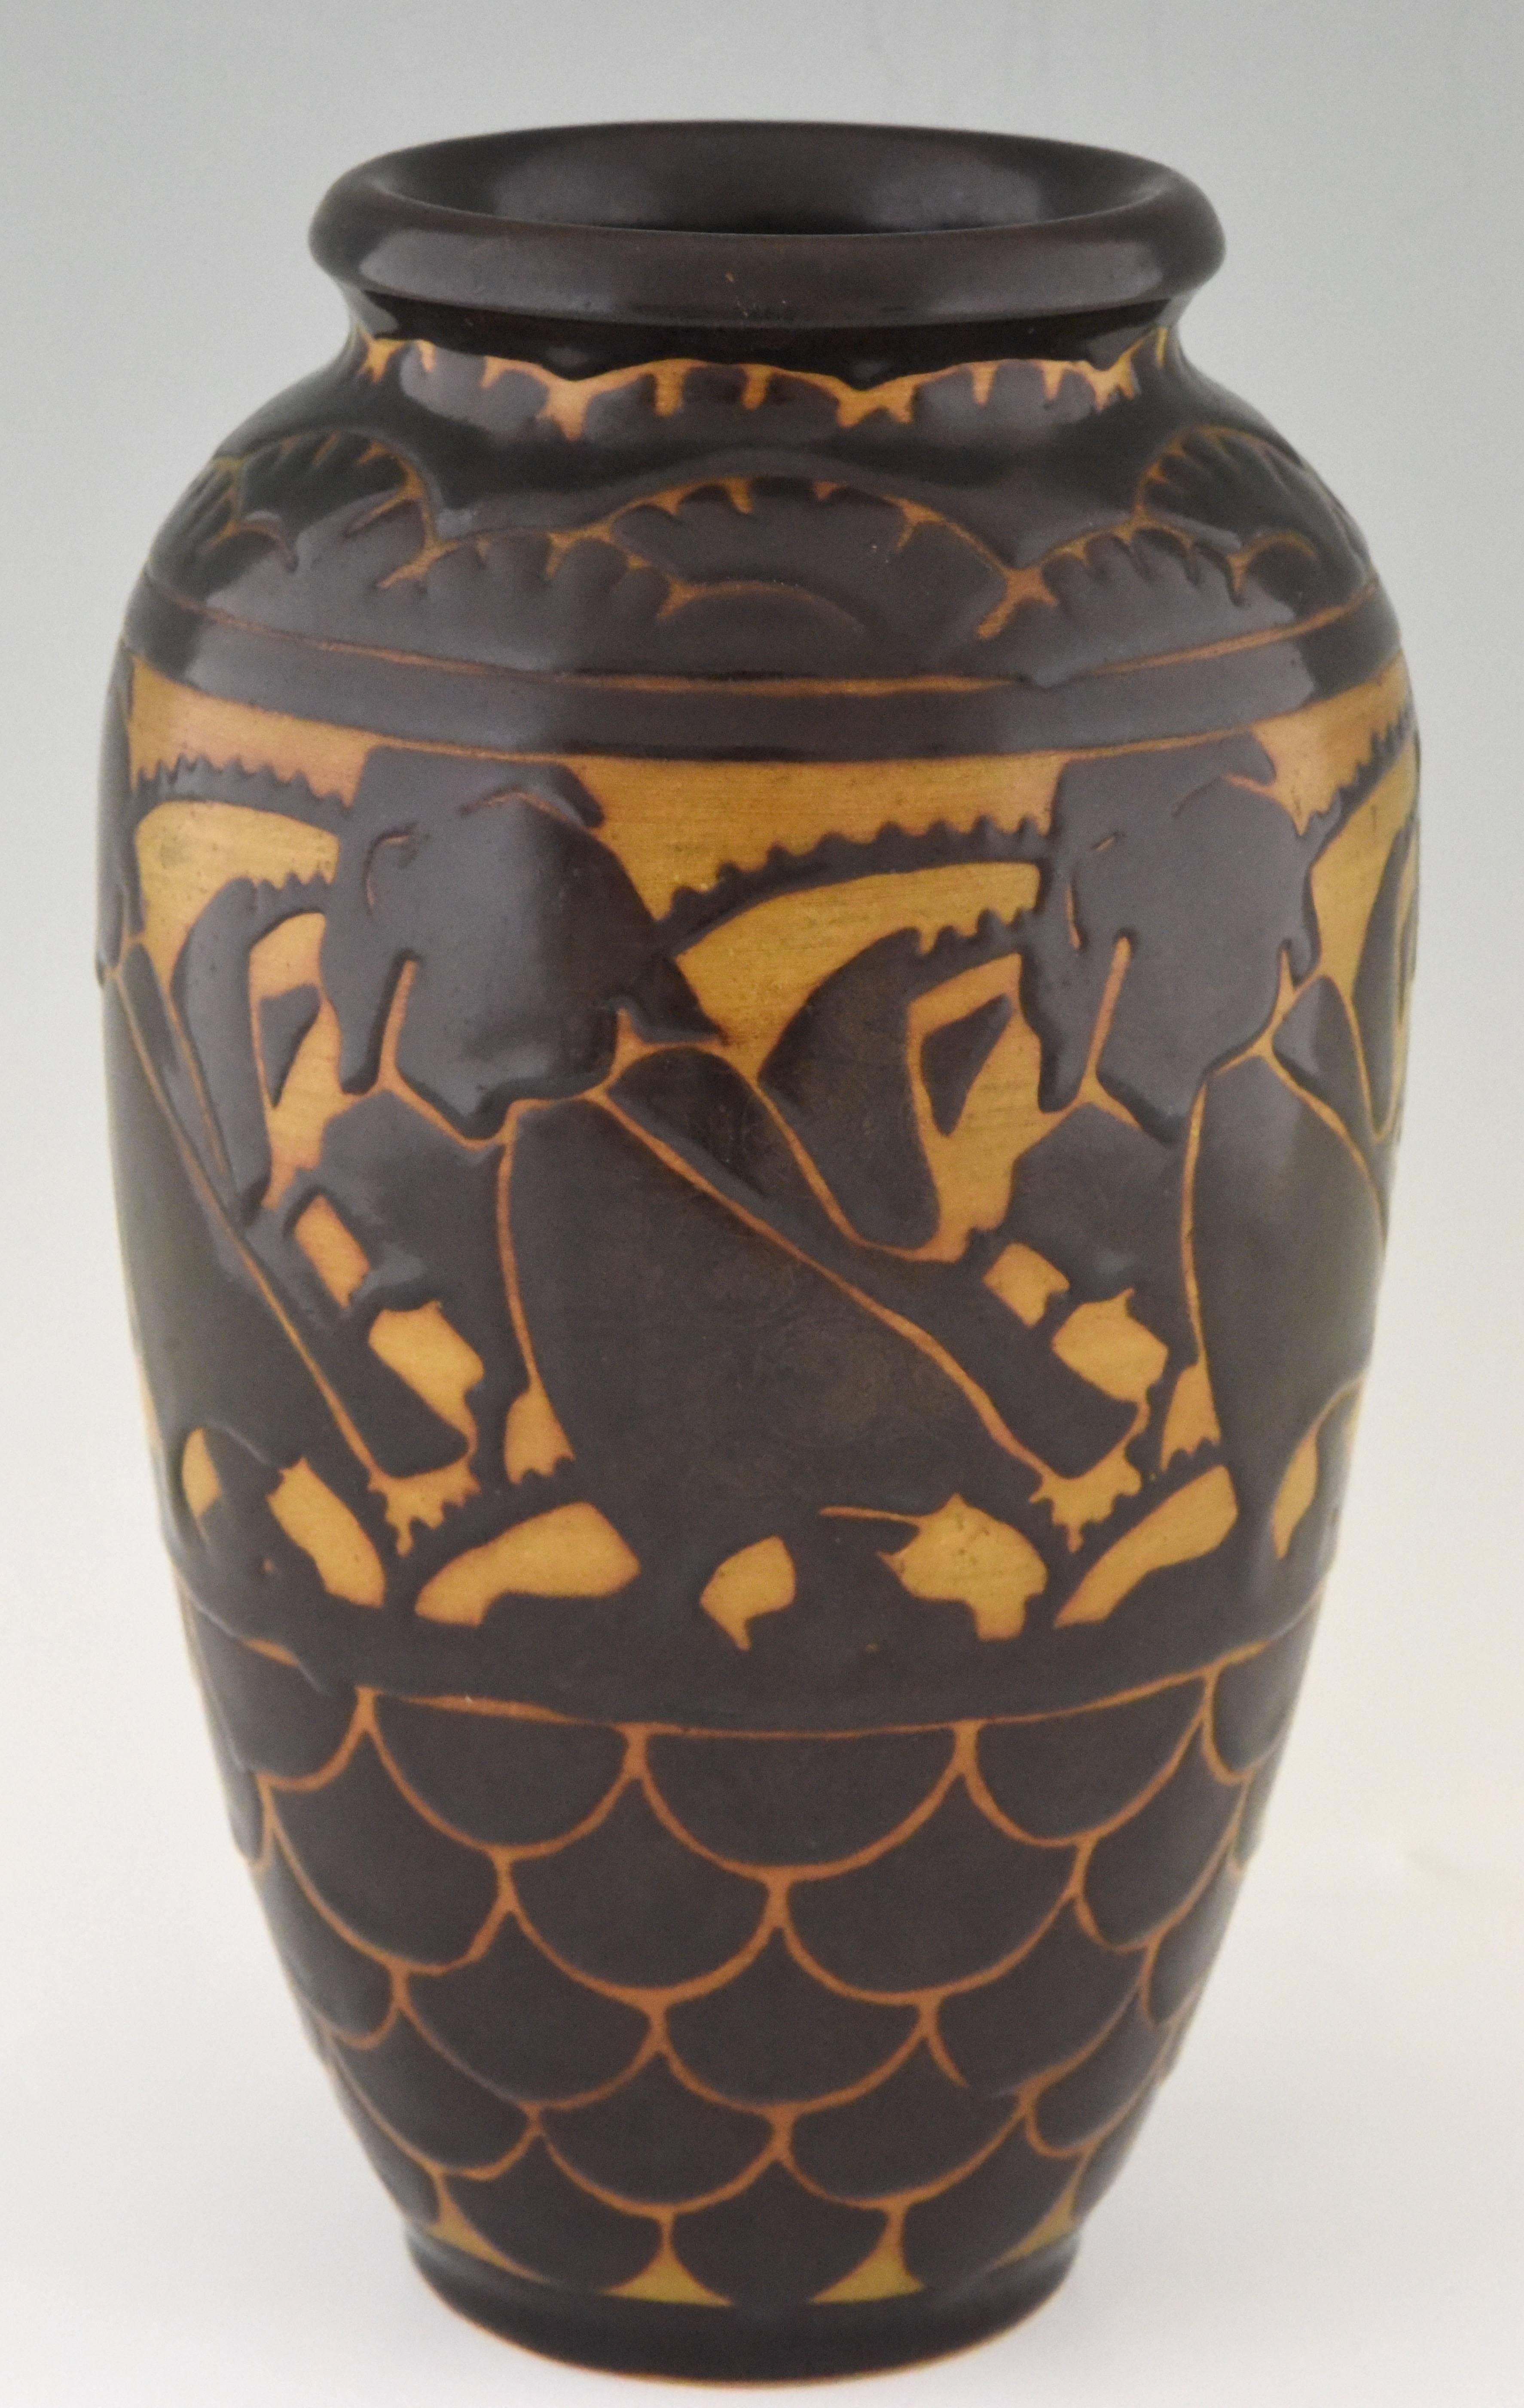 Art Deco ceramic vase with stylized birds.
Artist/ Maker: Charles Catteau, Keramis
Signature/ Marks: Ch Catteau, D 1026A, Keramis stamp.
Style: Art Deco
Date: 1925
Material: Grès, Ceramics.
Origin: Belgium
Size: H 31 cm. x W 19 cm x L 19